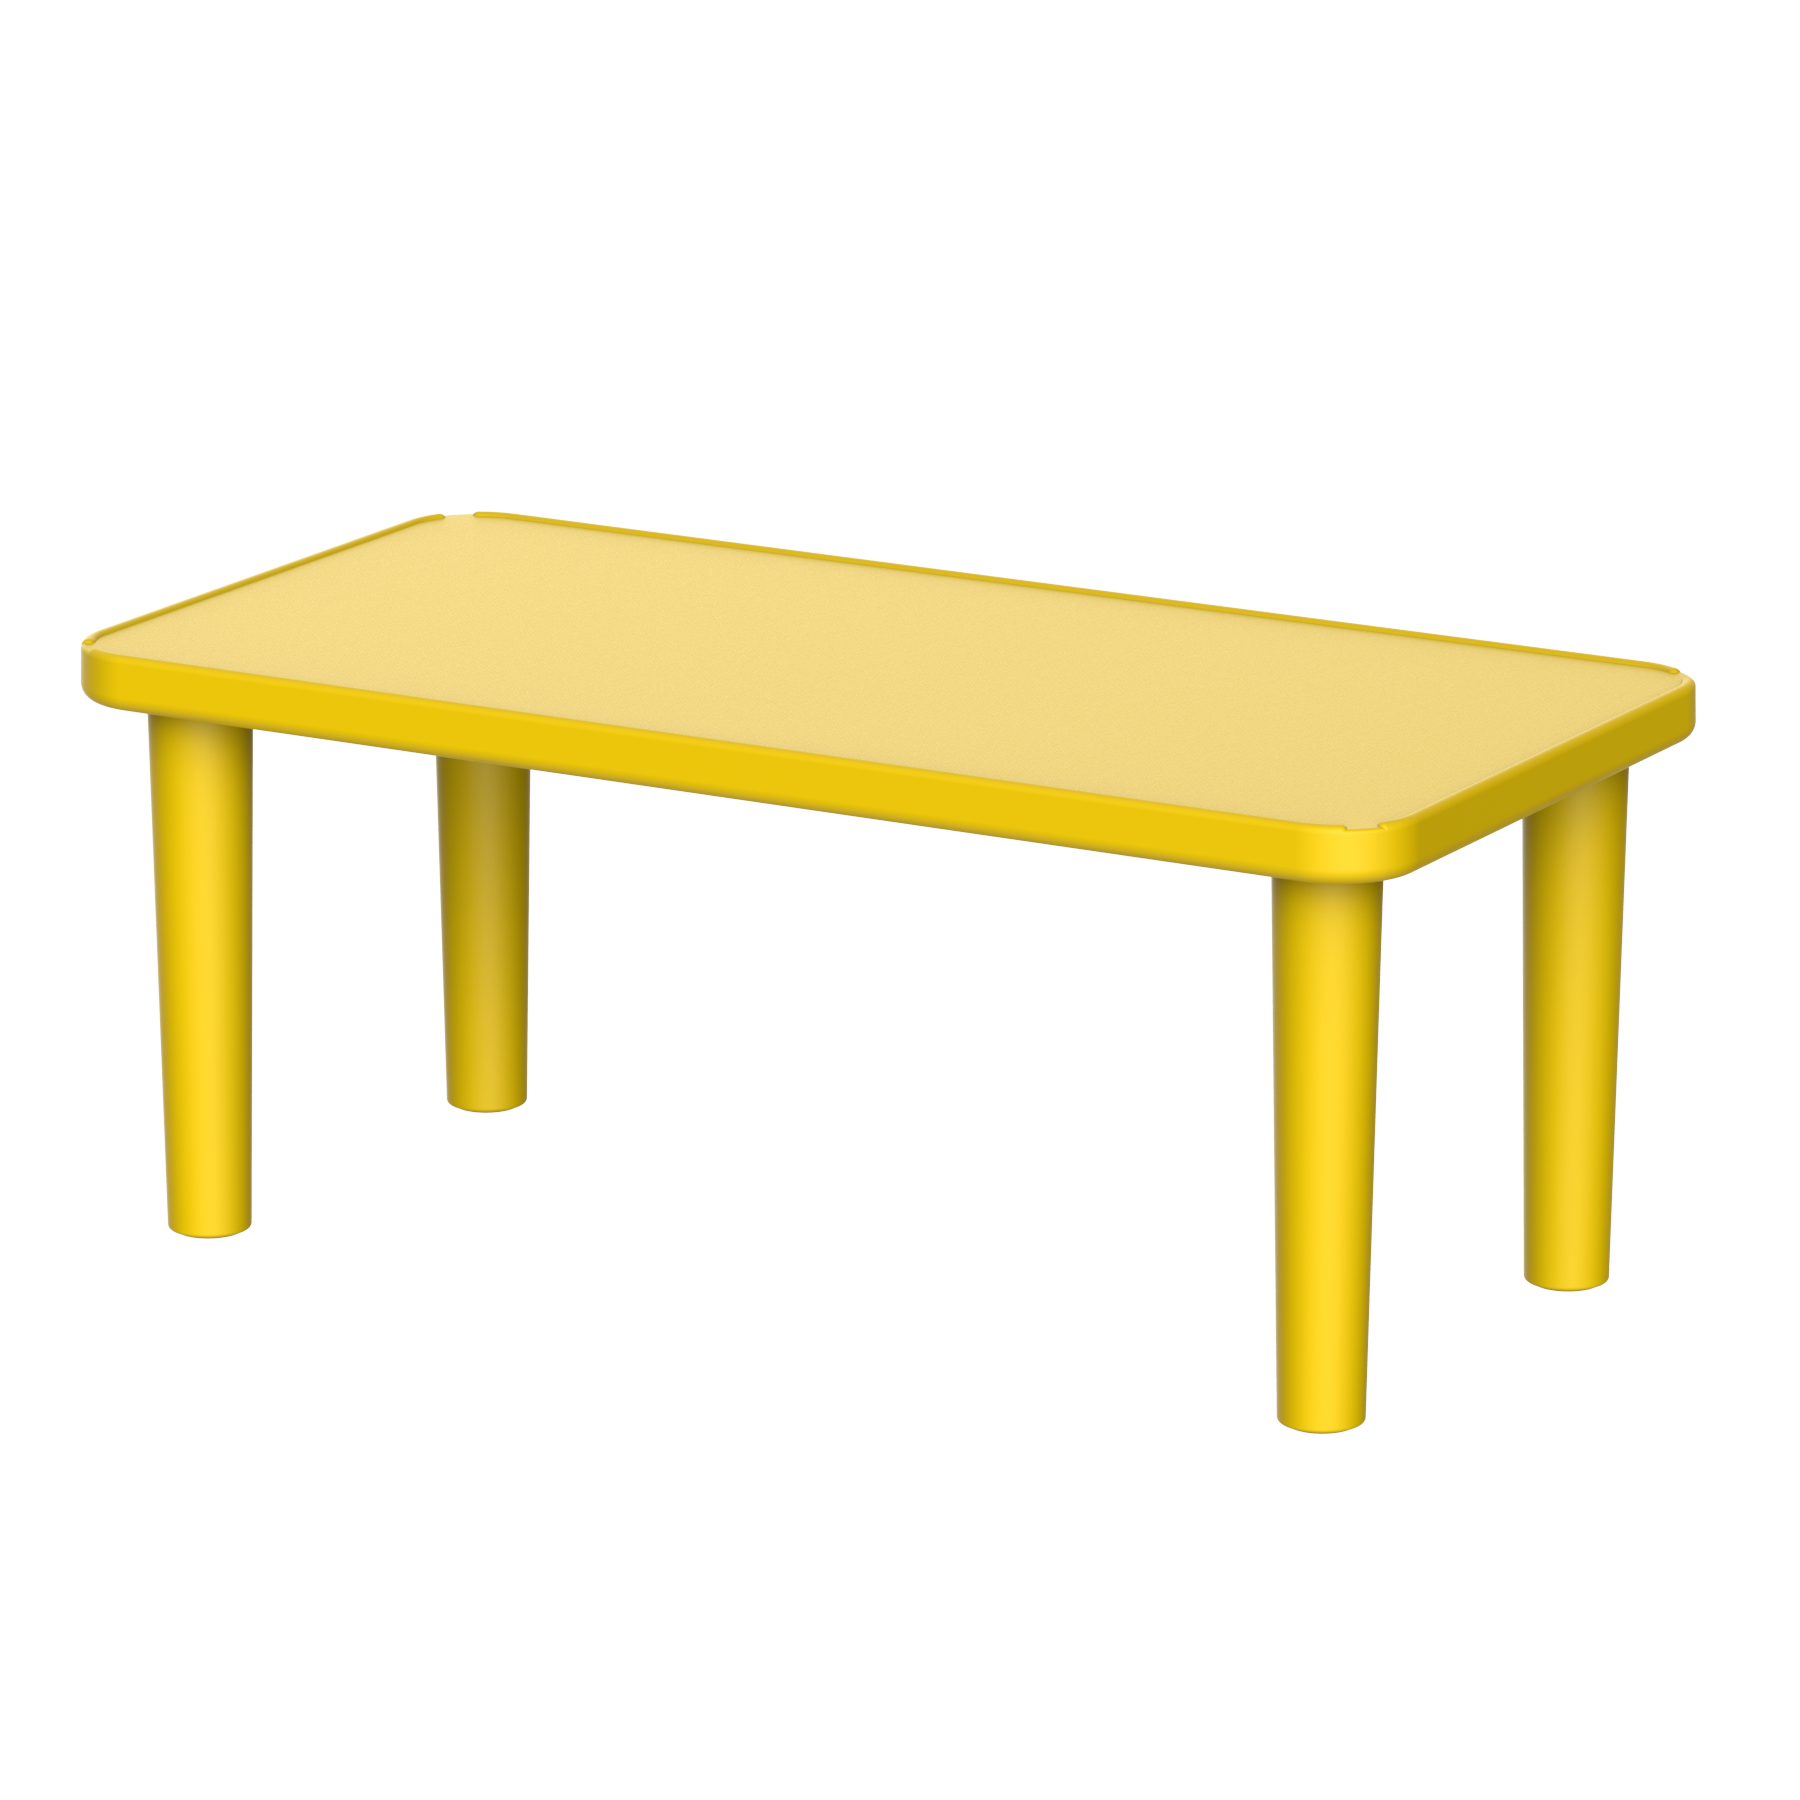 Duramax Kindergarten Table Duramax Kindergarten Table - Rectangle Yellow